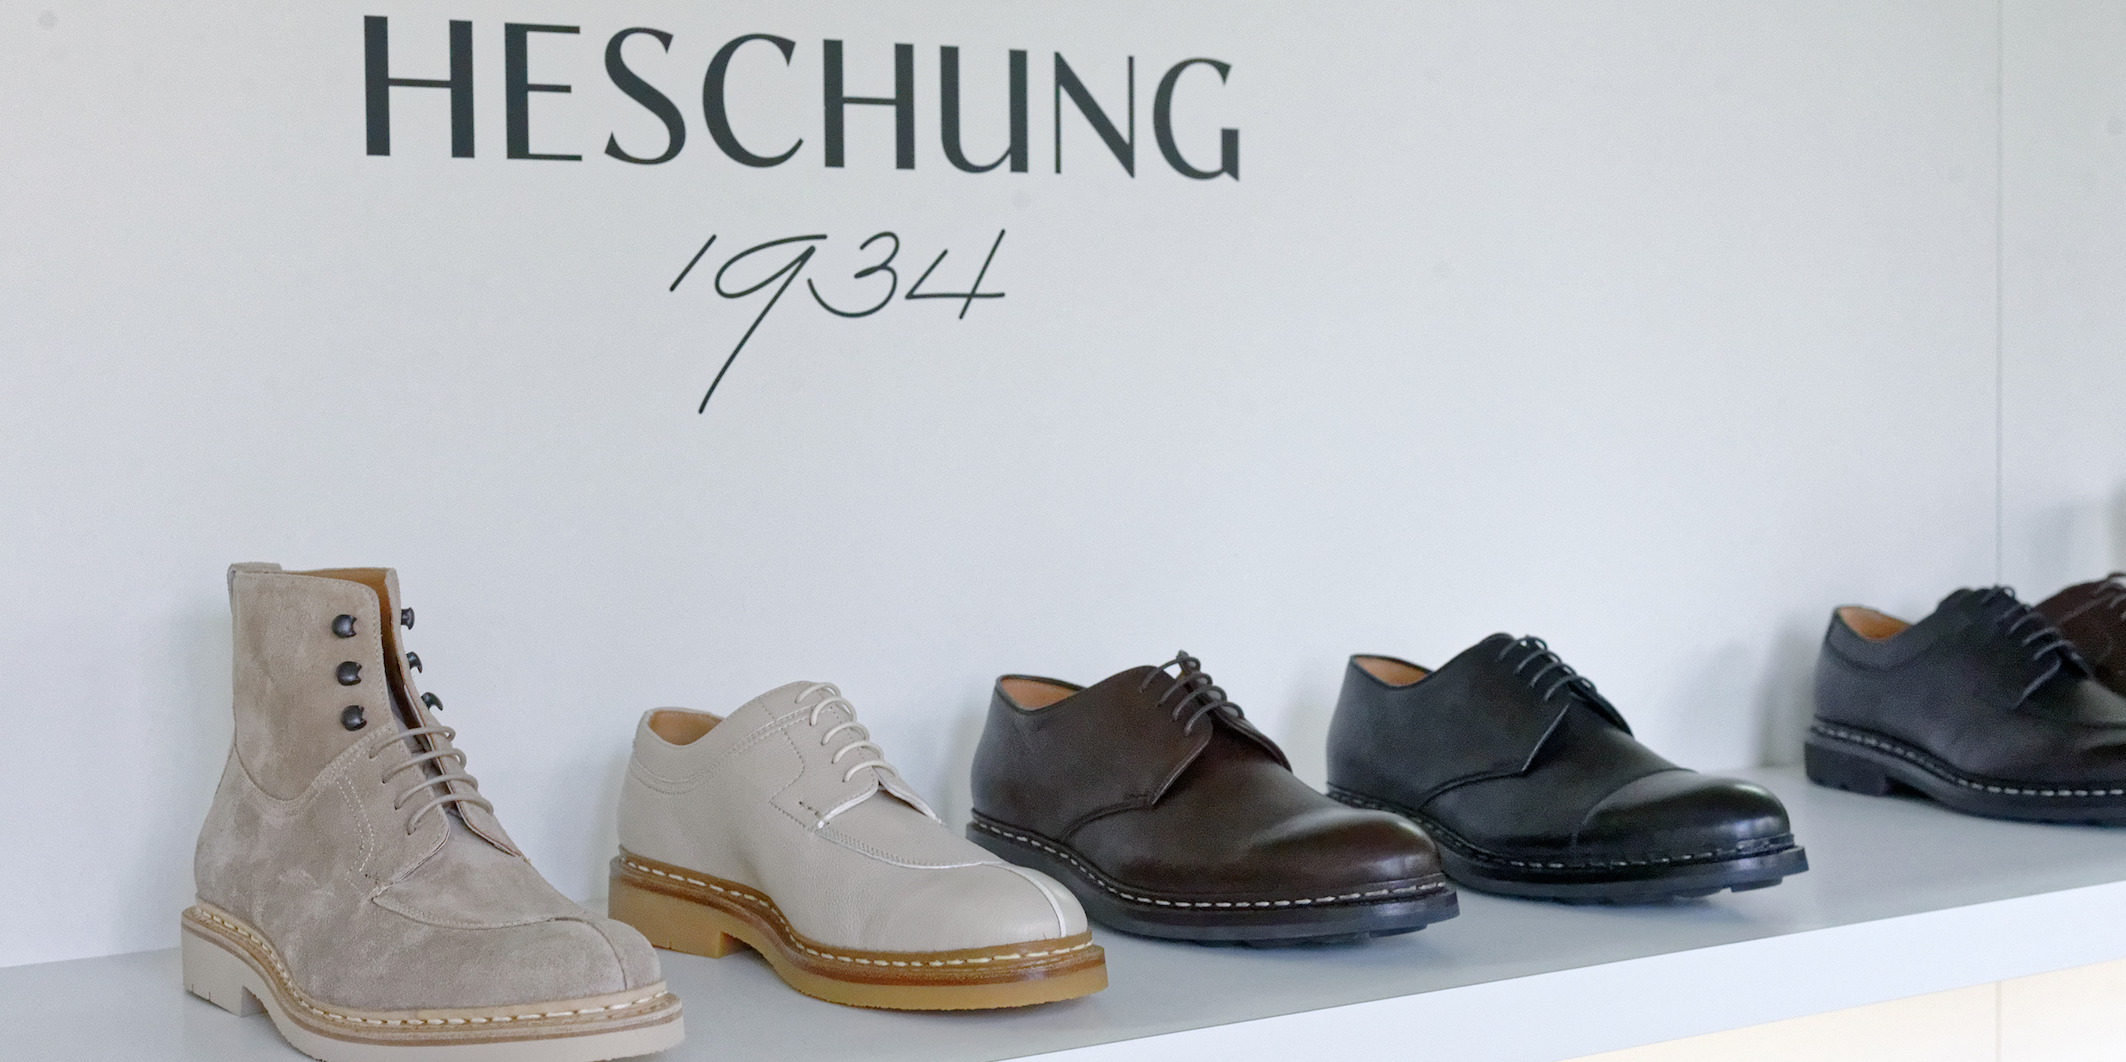 Made in France : les chaussures Heschung changent encore de propriétaire